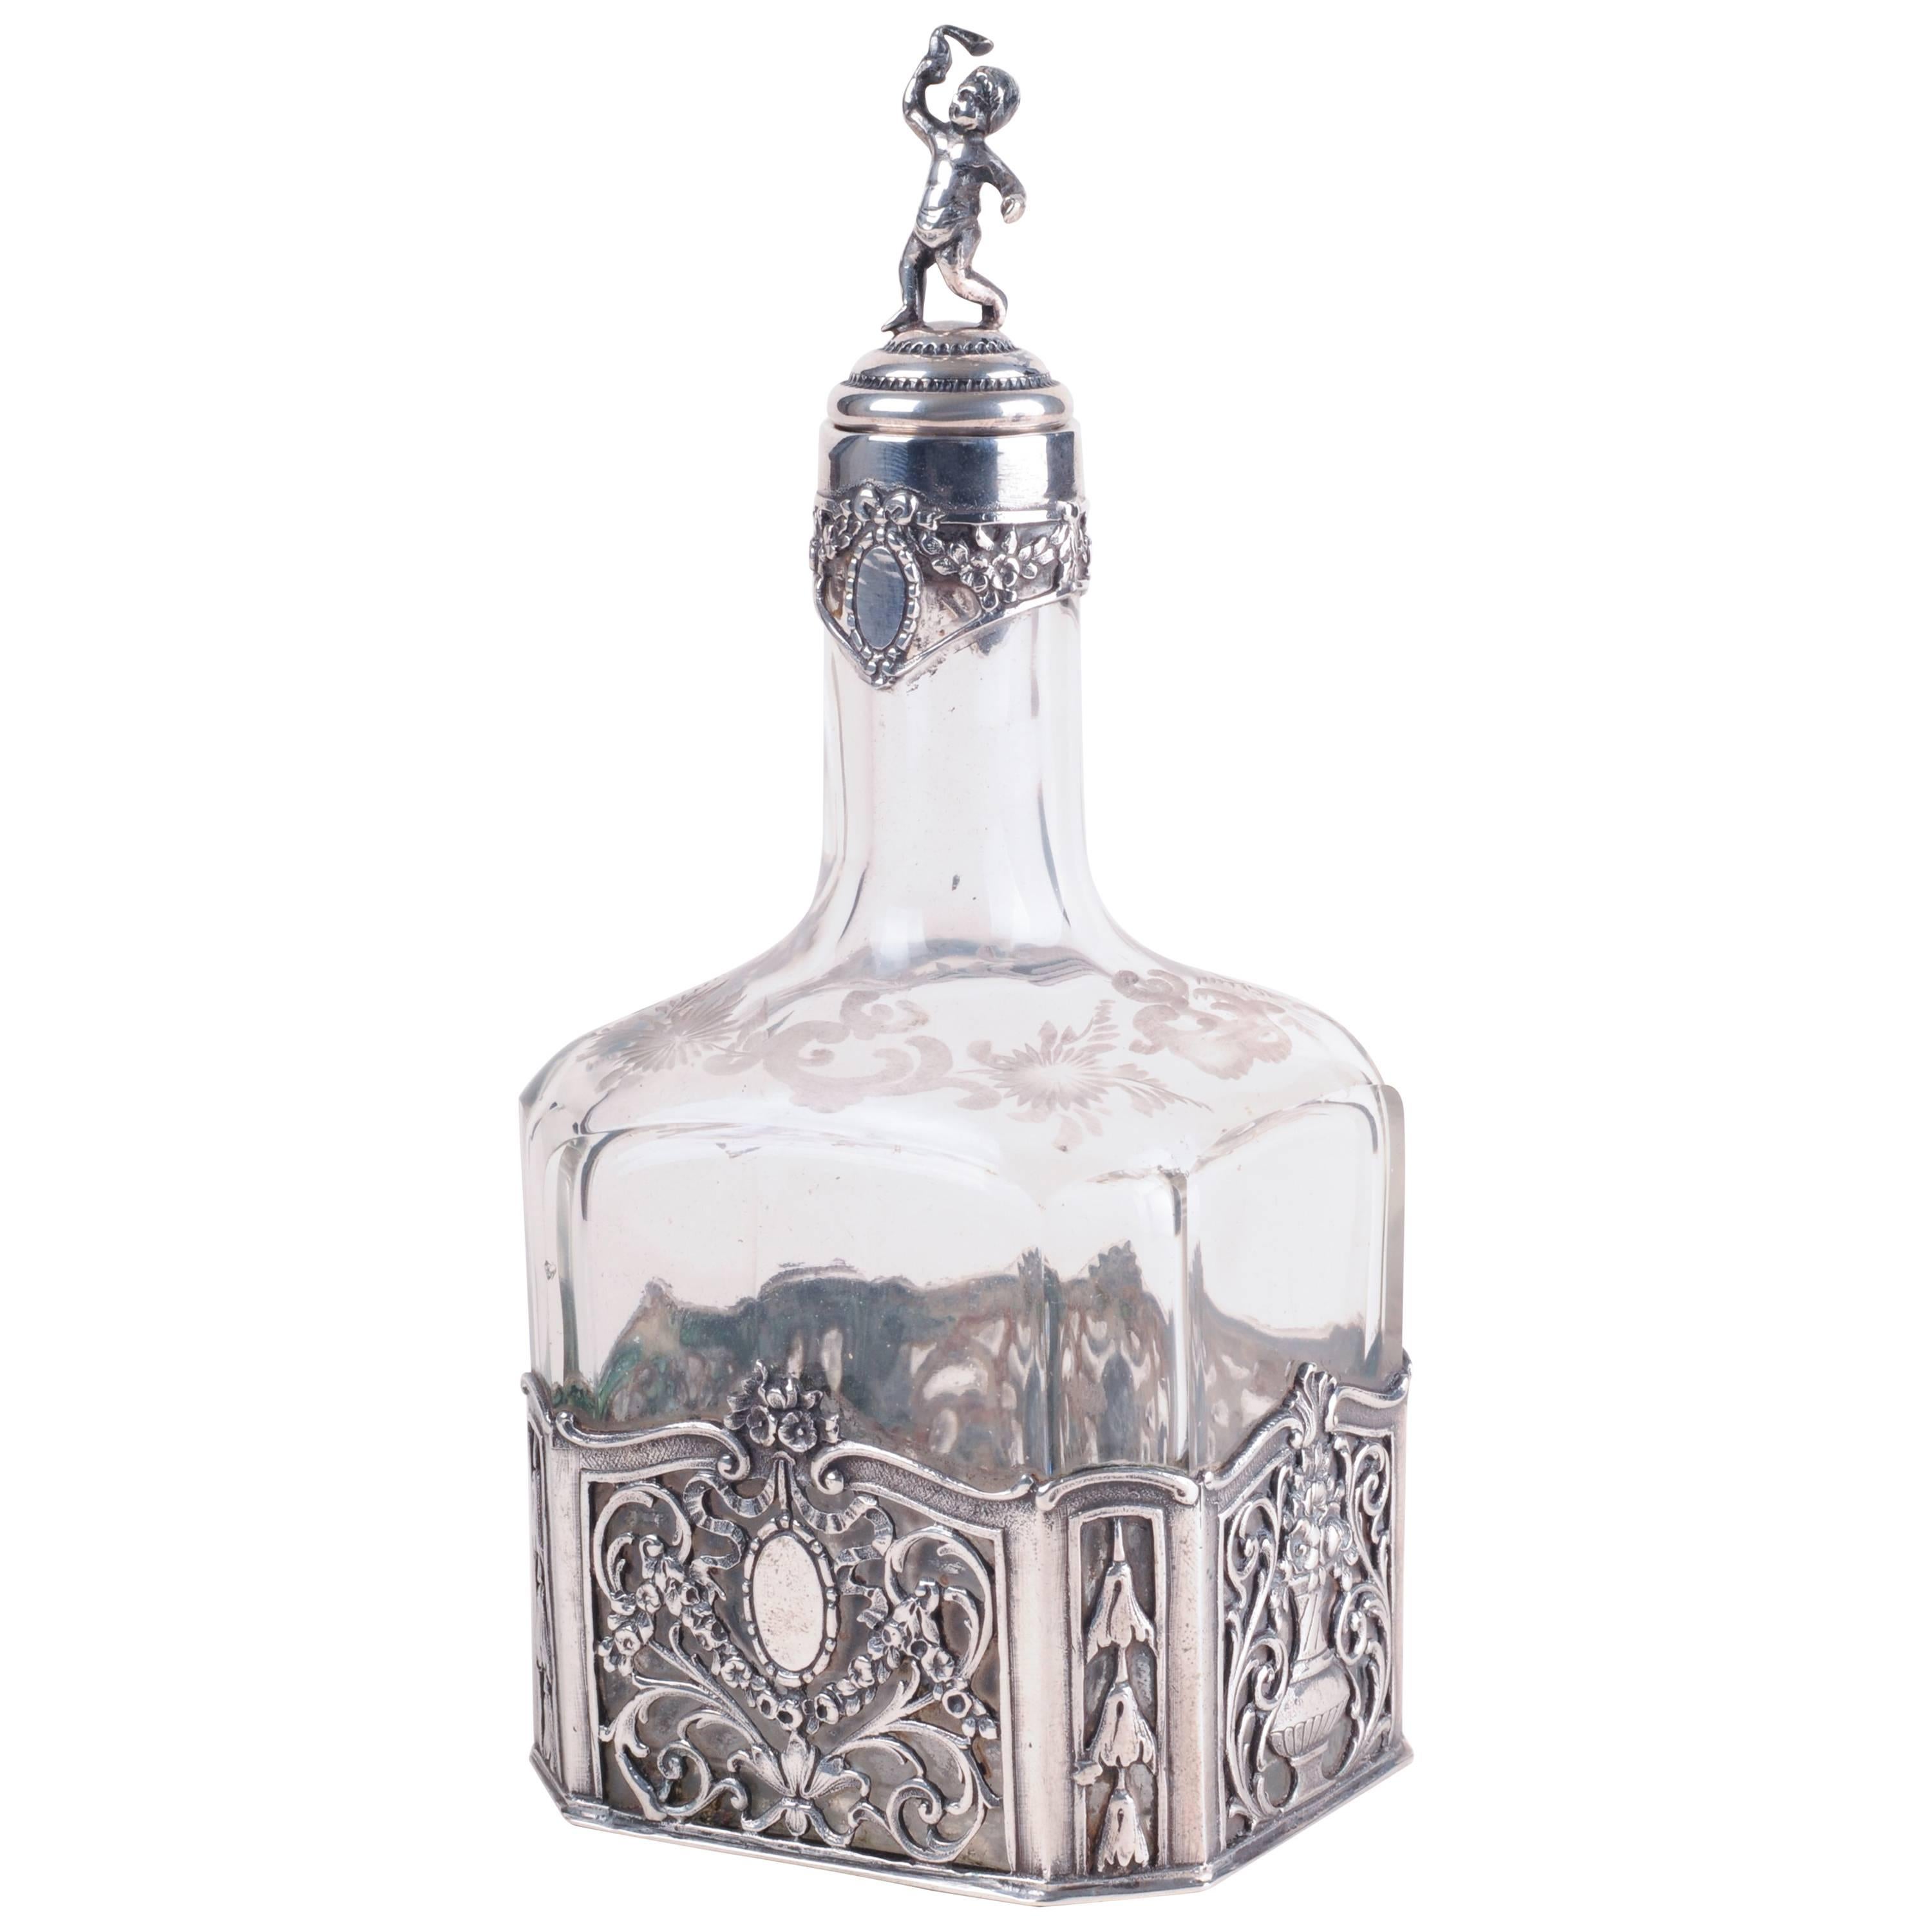 Storck & Sinsheimer 1874-1926 Glass Silver Decanter For Sale